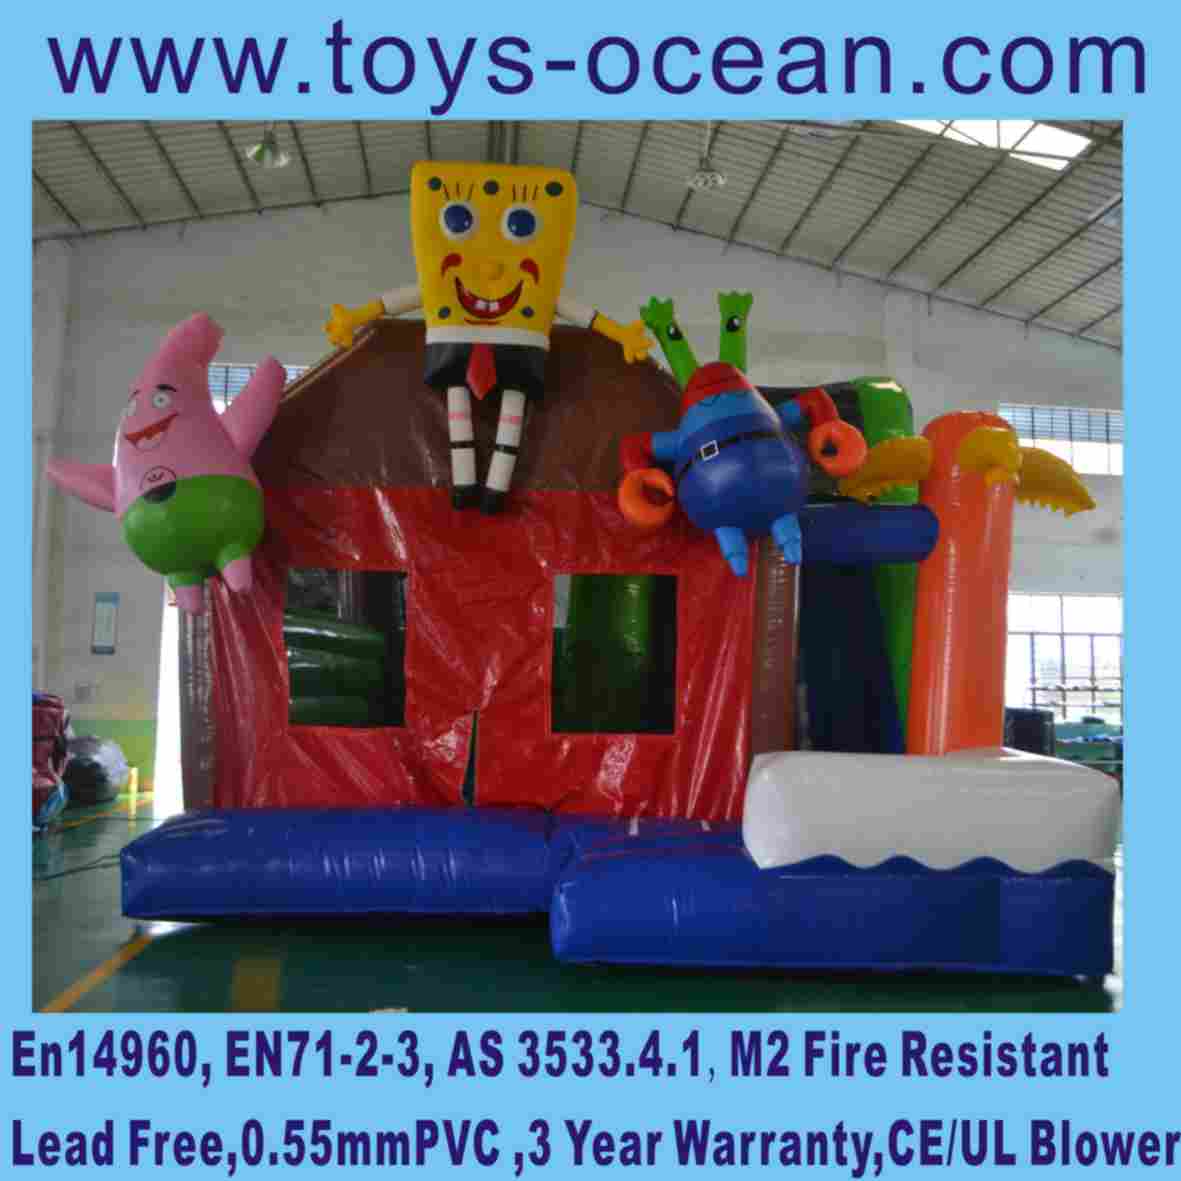 Toys-ocean amusement equipment co ltd